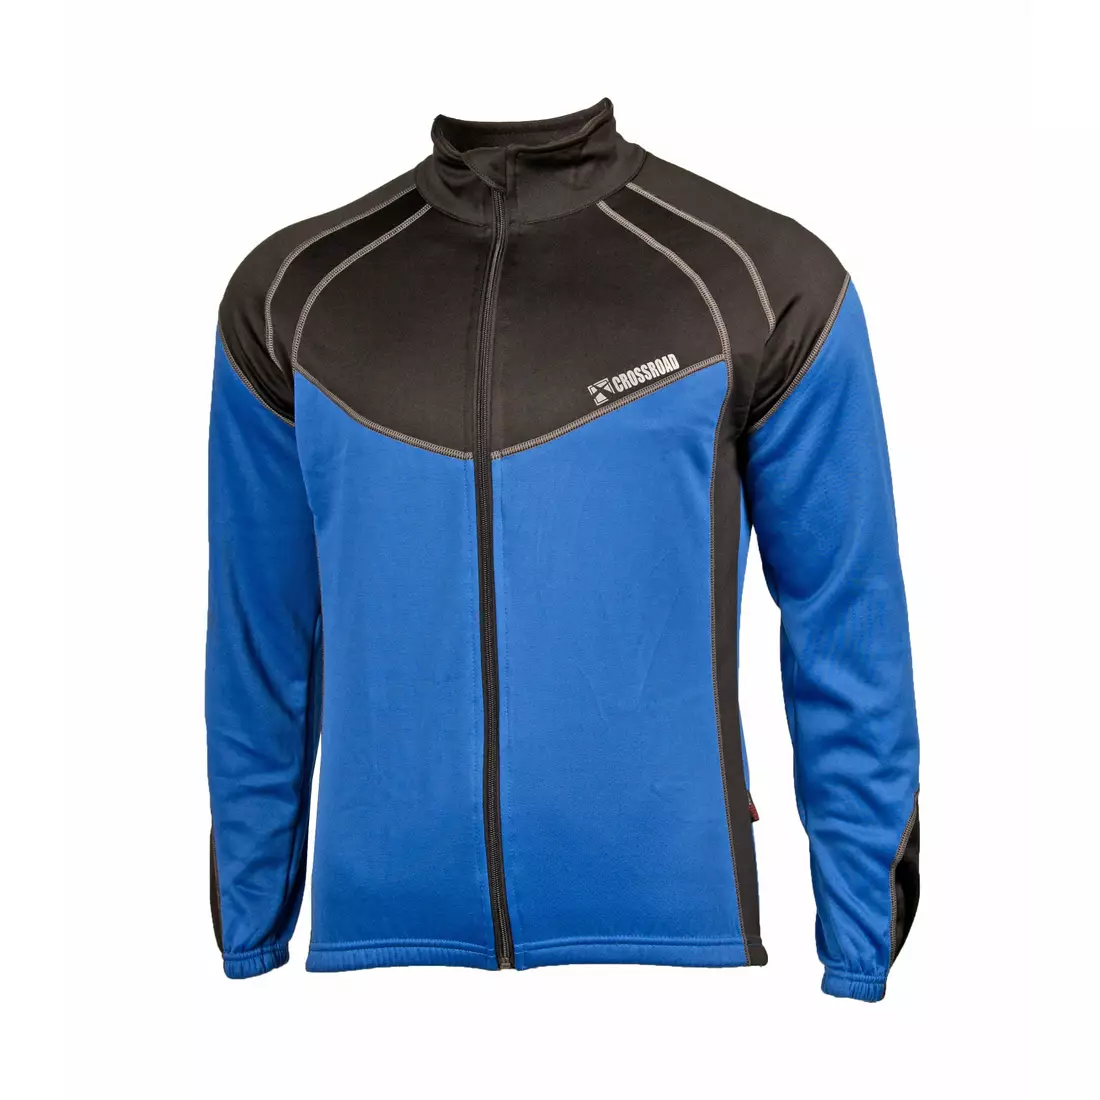 CROSSROAD KENT warm cycling sweatshirt, black and blue